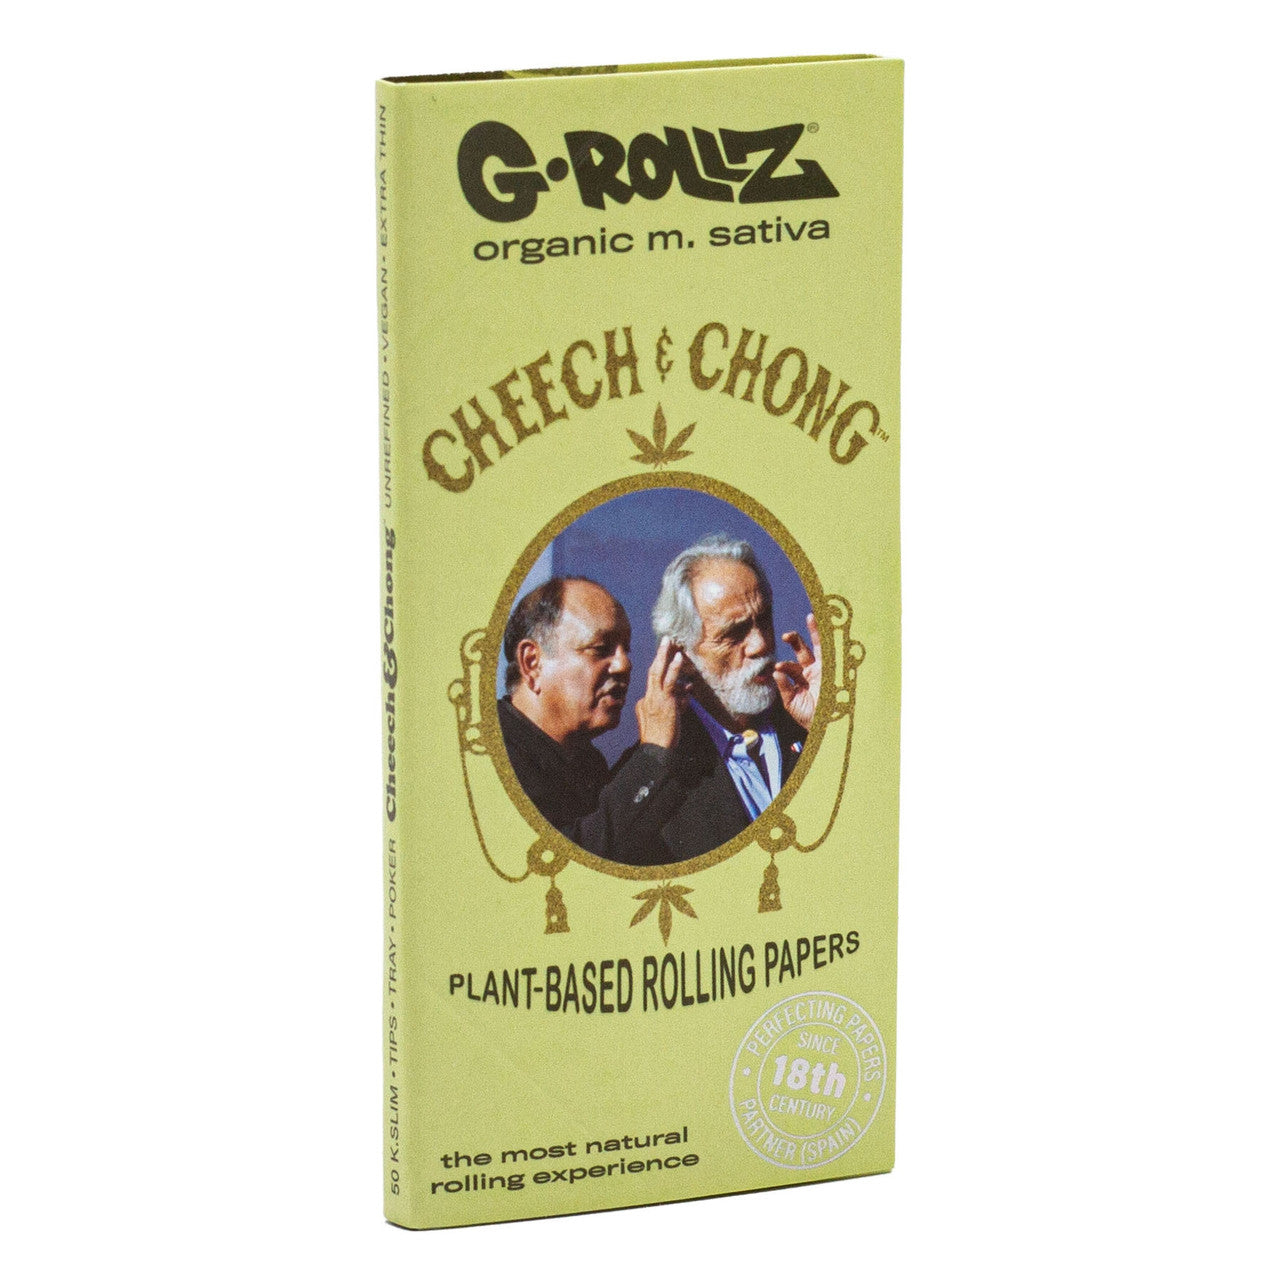 G Rollz Cheech and Chong Papers - Bio Organic Medicago Sativa (King Slim Size)